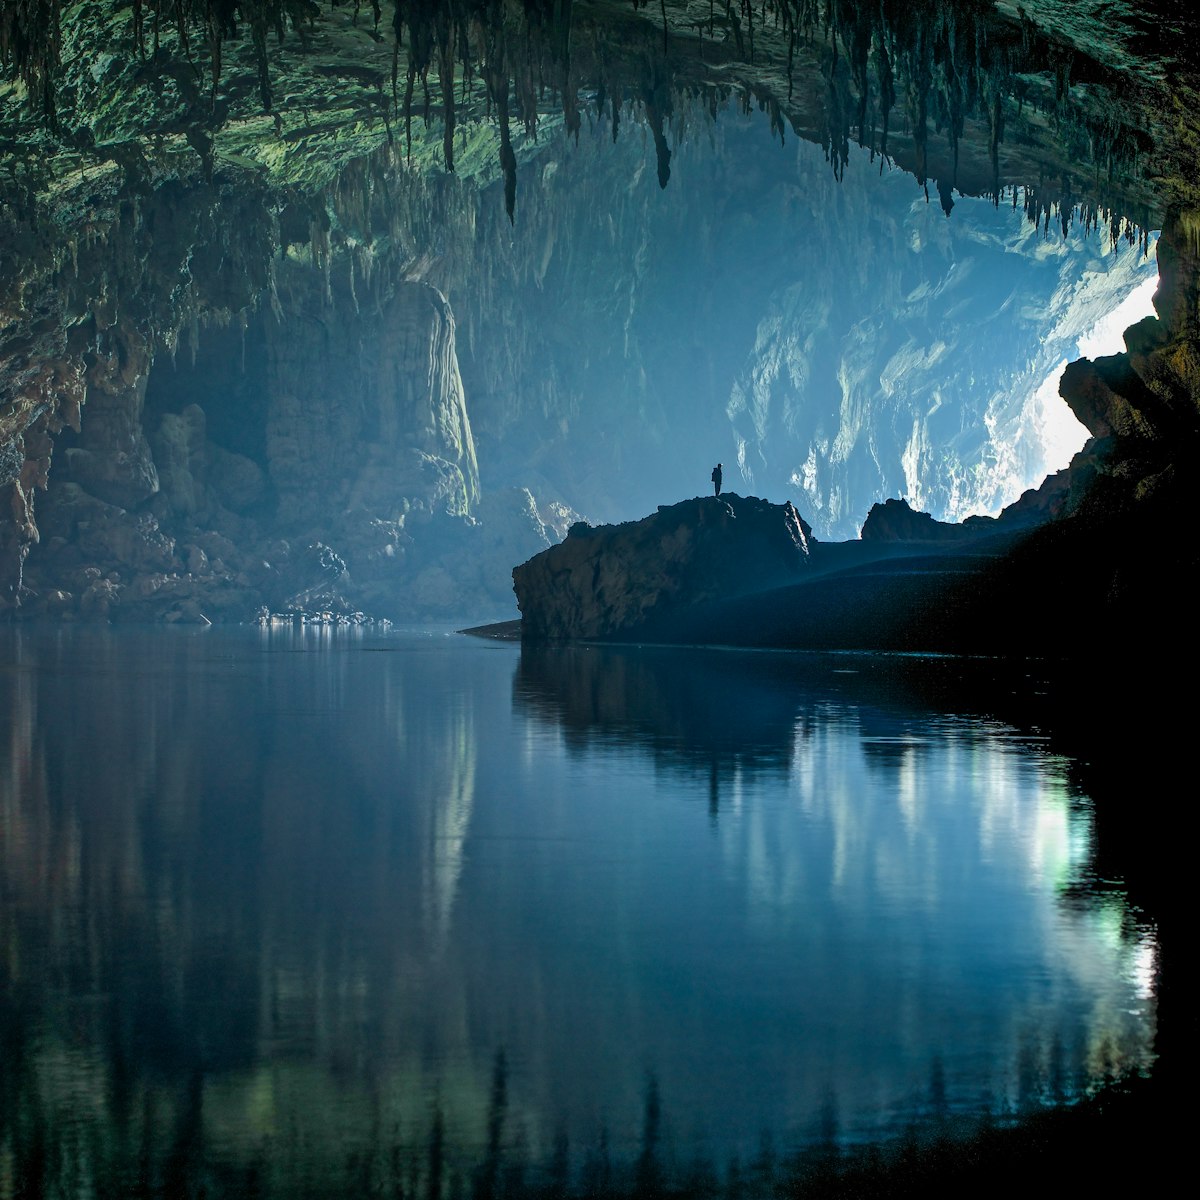 Xe Bang Fai Cave, Laos
cave, entrance, laos, reflection, river, xe bang fai, silhouette, stalagtite, water, person, southeast asia